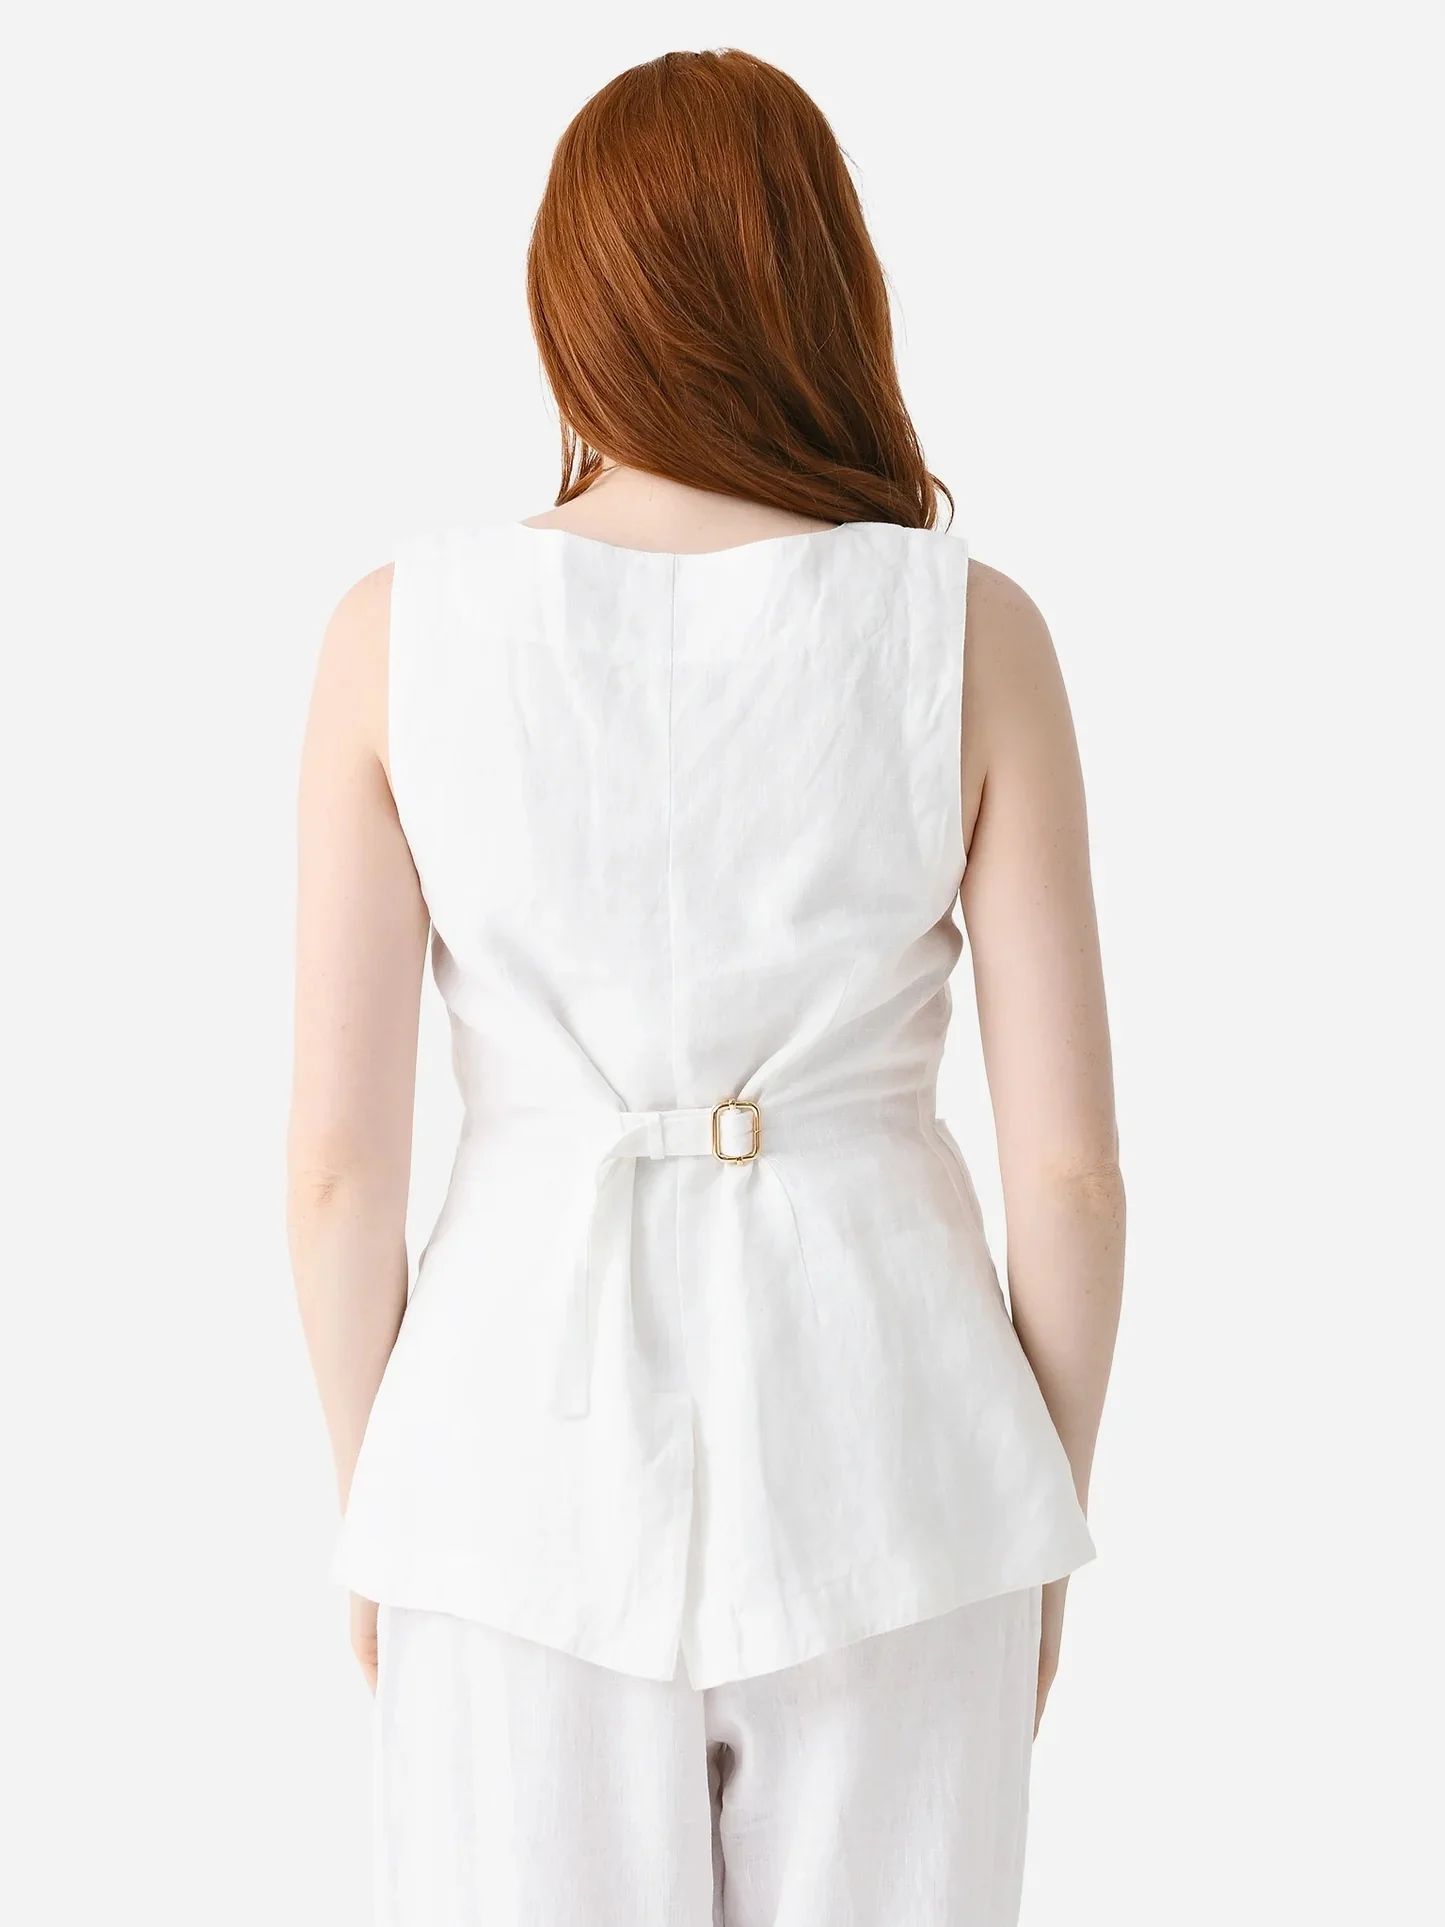 POSSE
                      
                     Women's Emma Vest | Saint Bernard